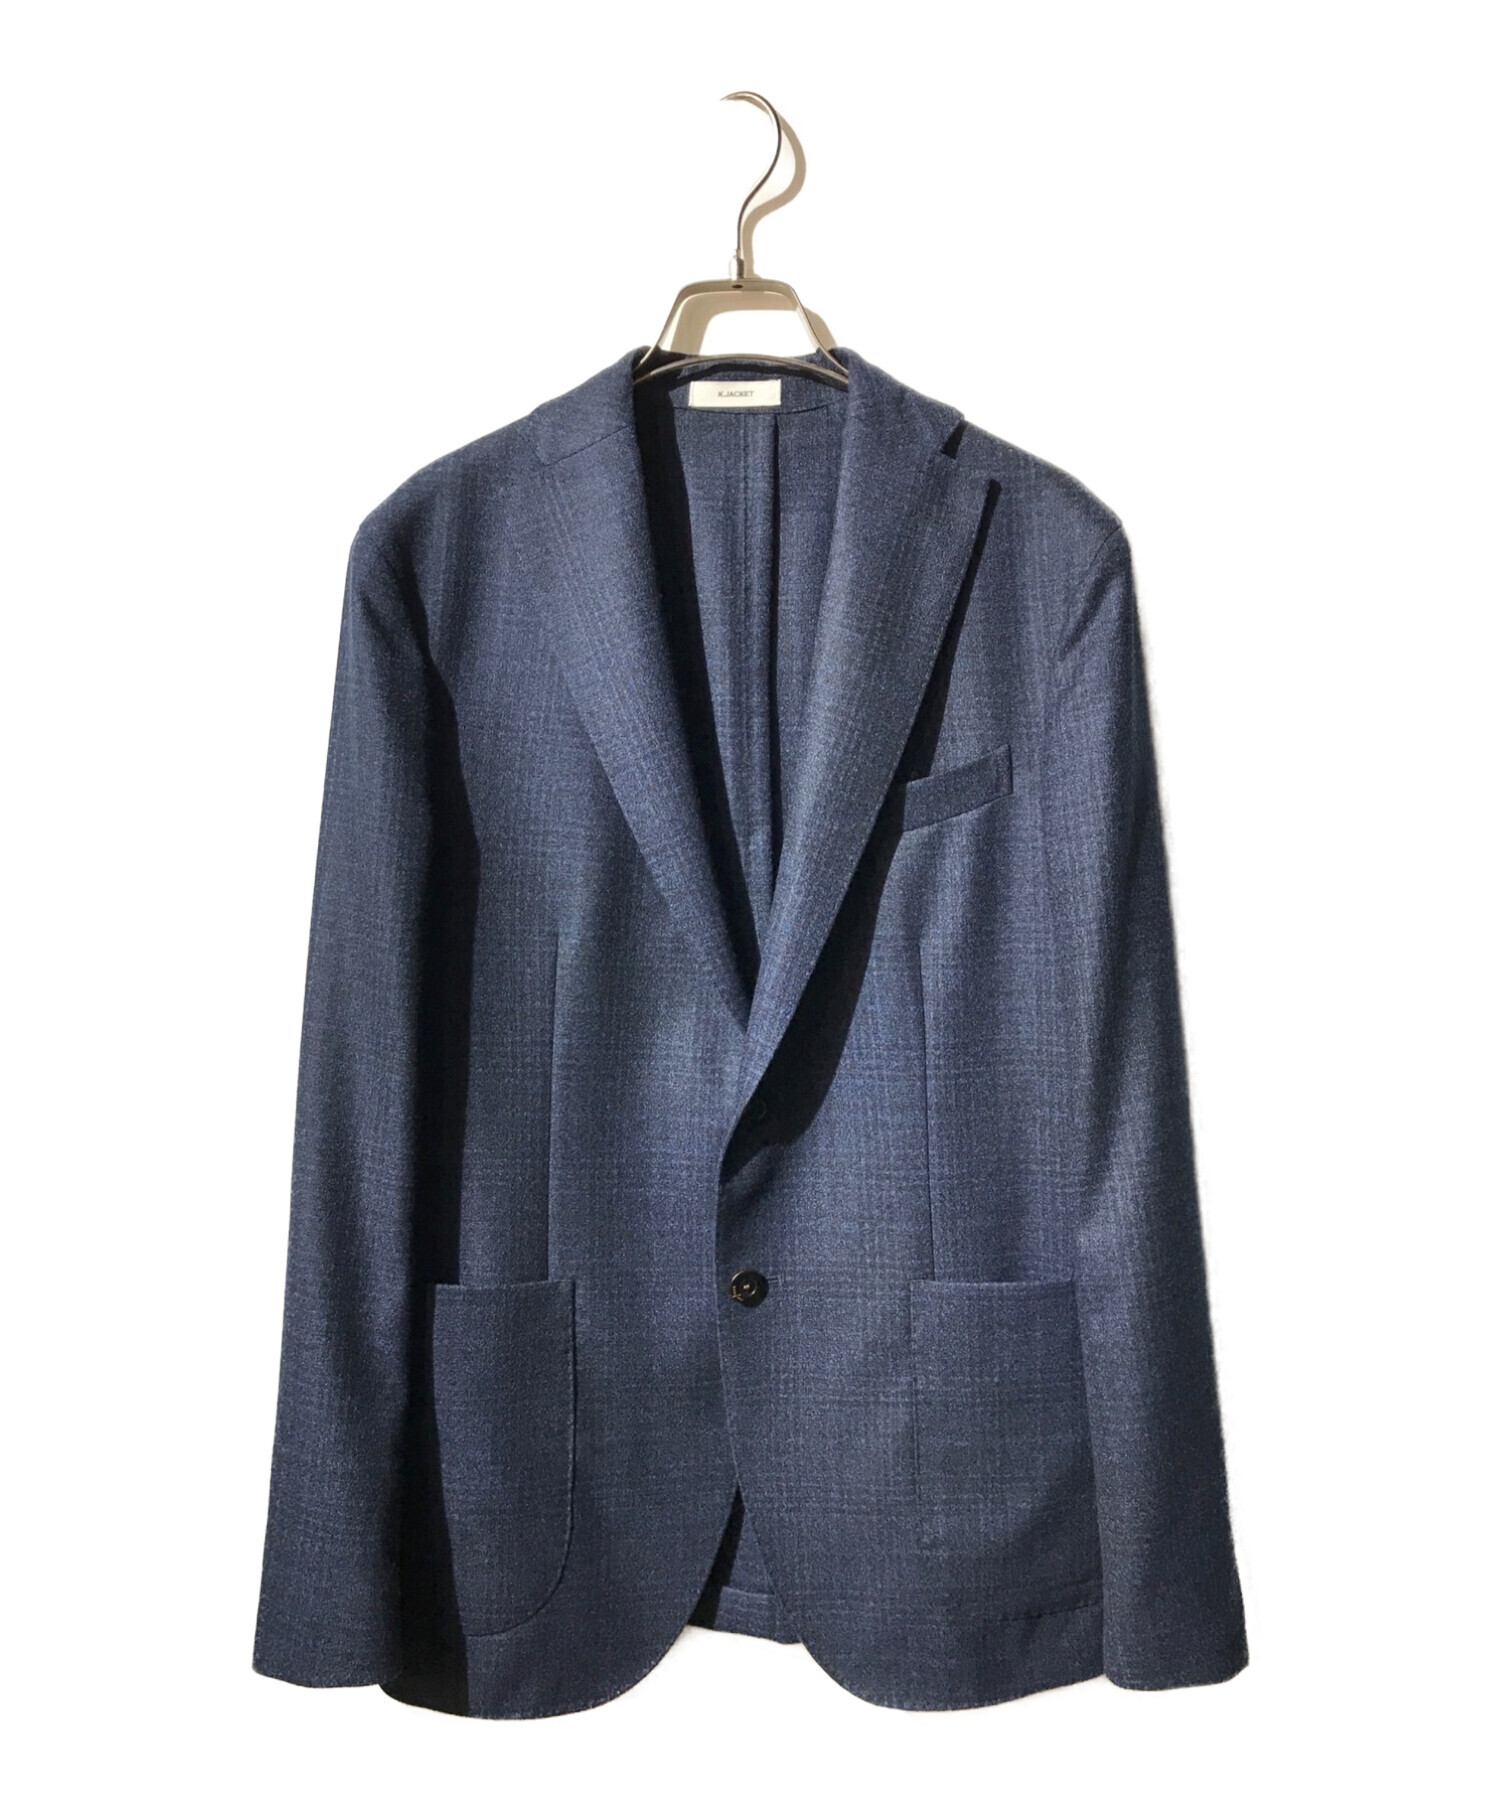 BOGLIOLI K.jacket サイズ46パッチポケット